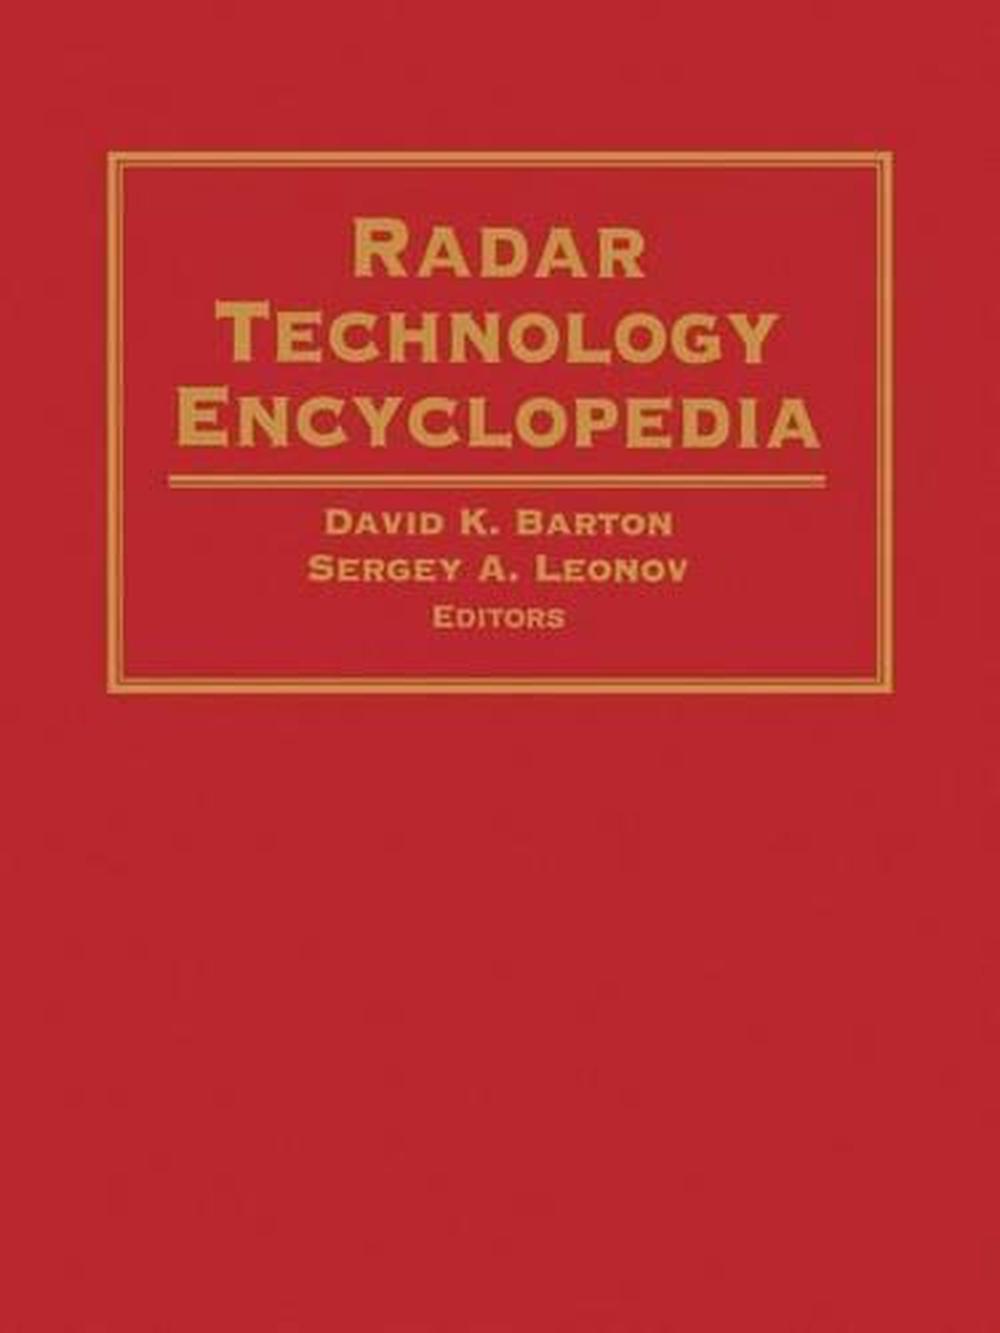 Radar Technology Encyclopedia by David K. Barton (English) Paperback